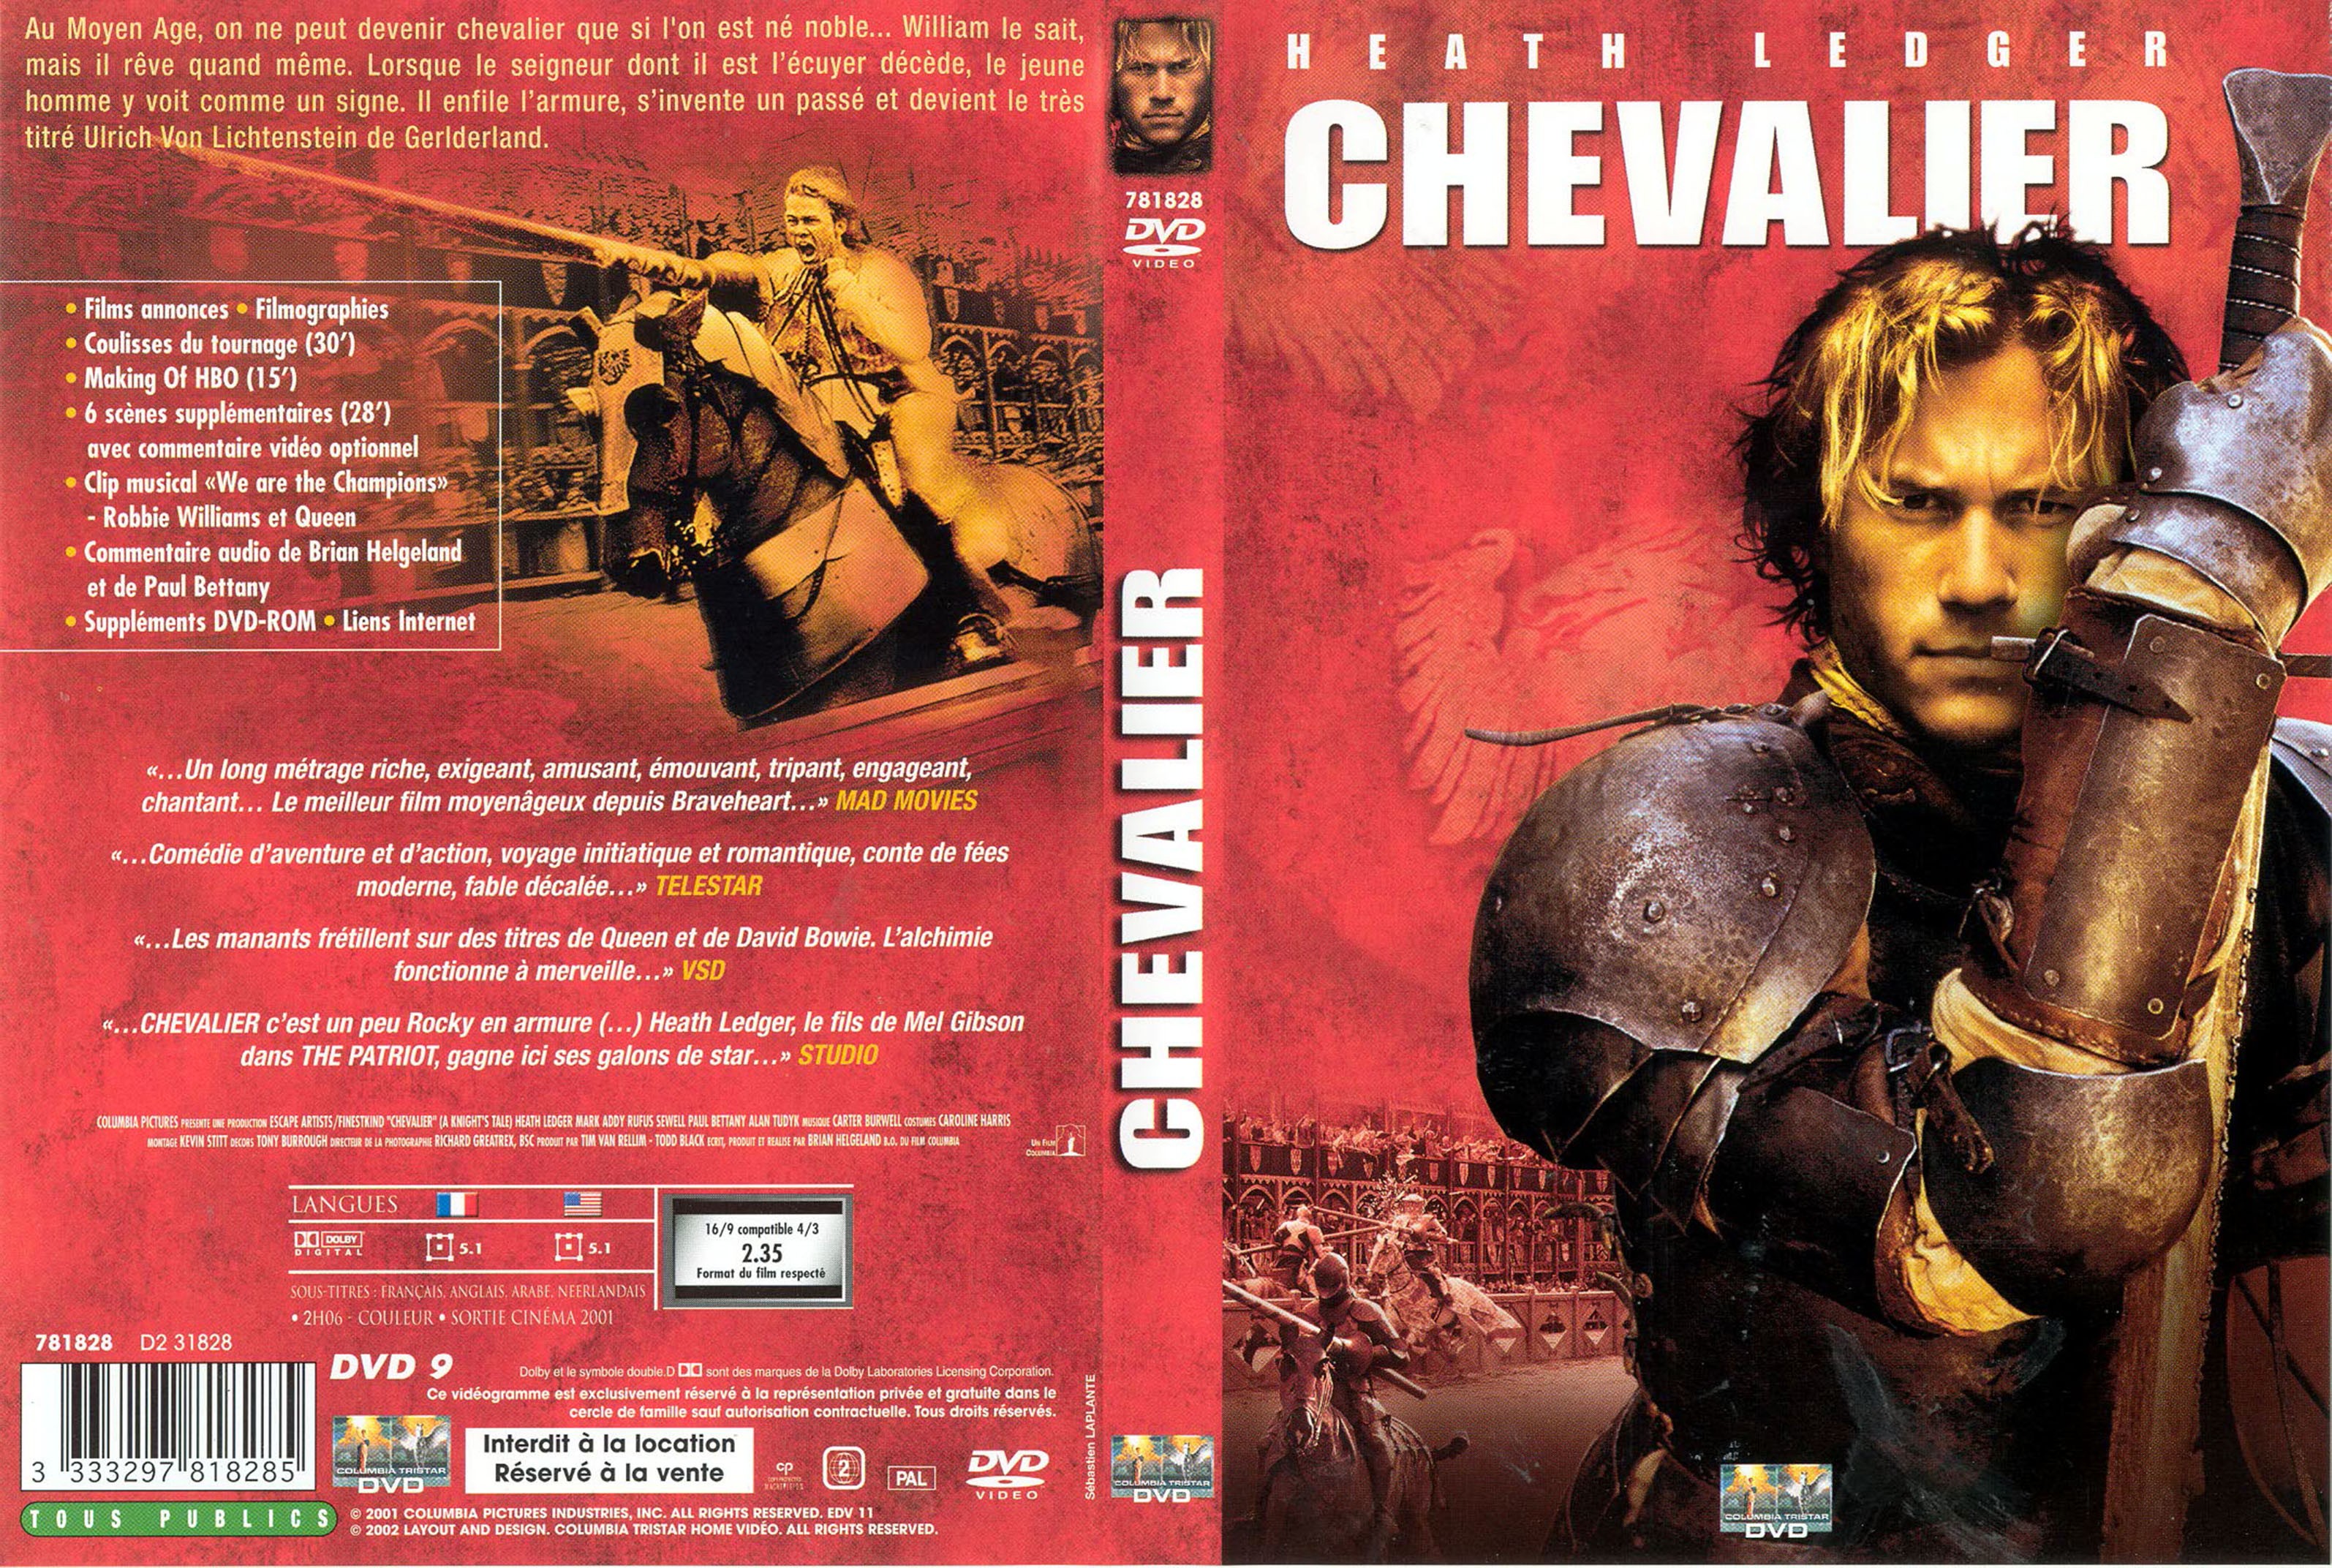 Jaquette DVD Chevalier